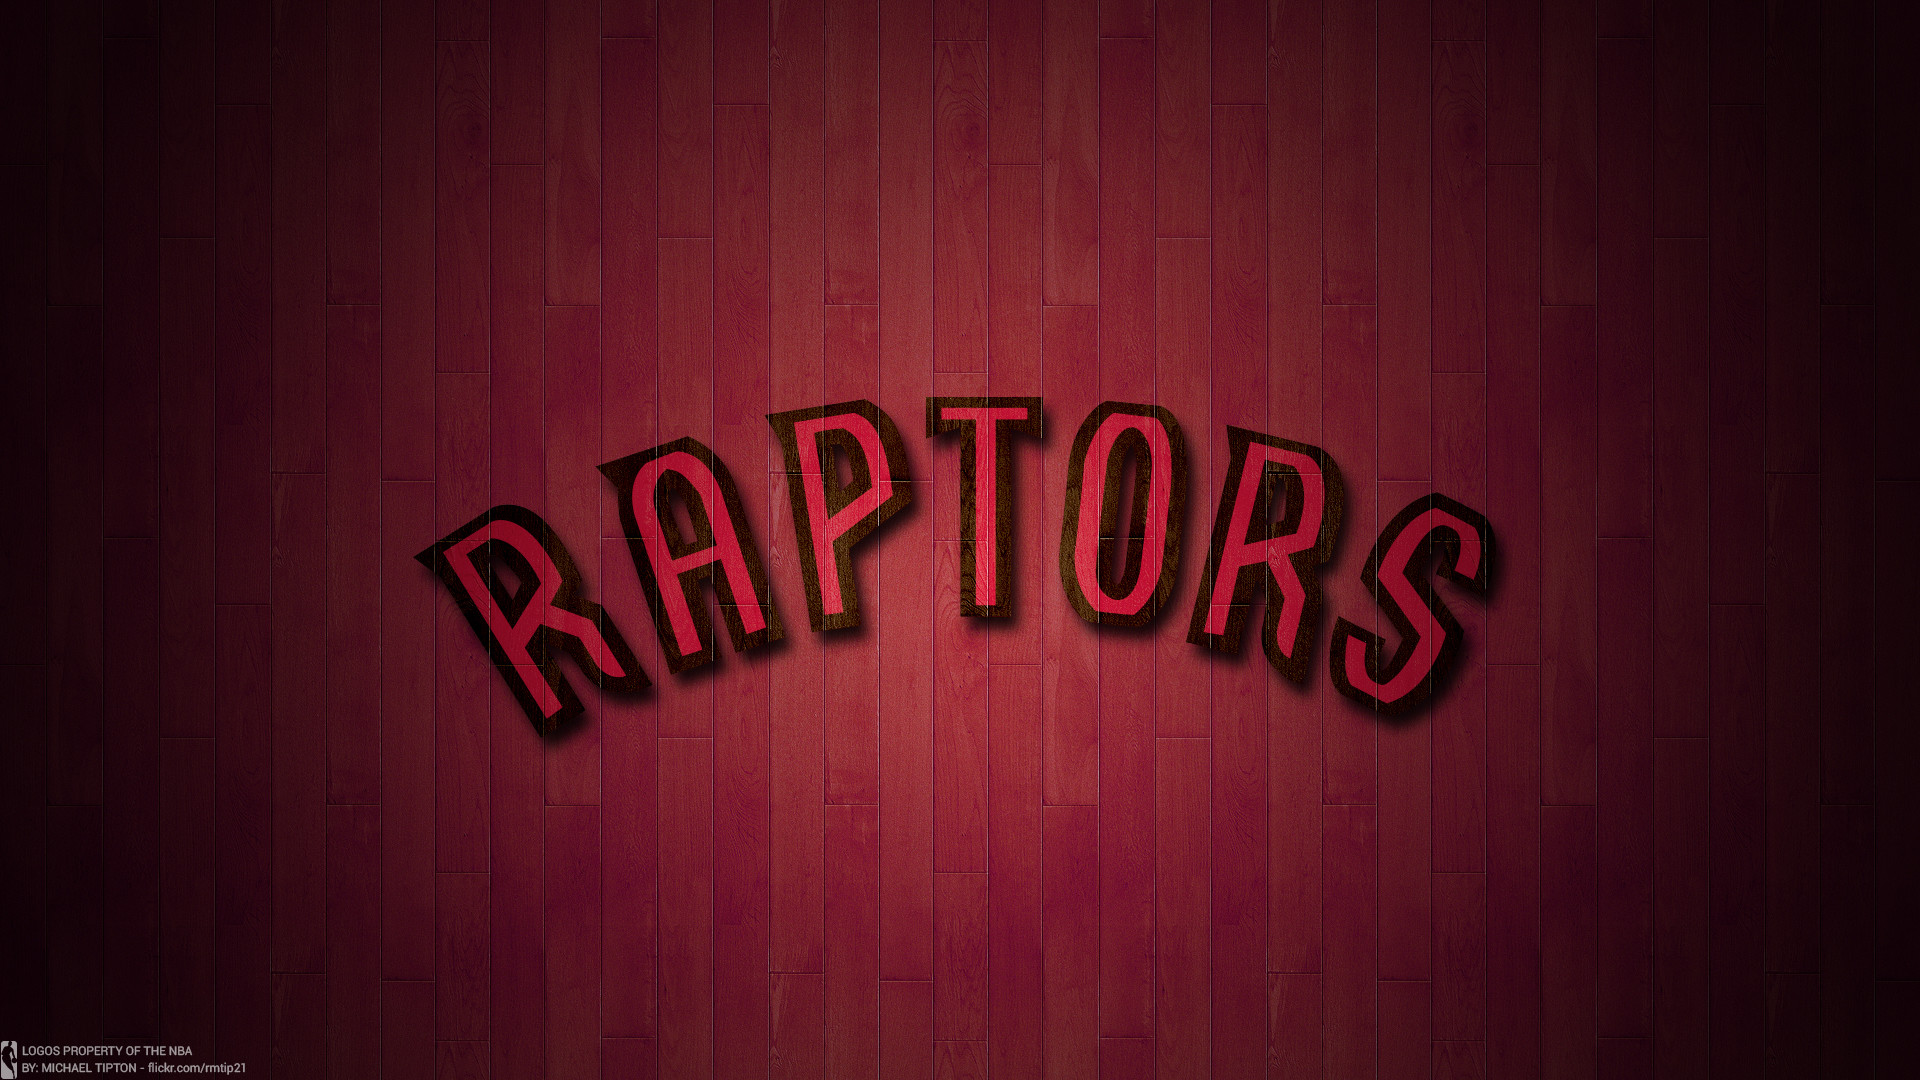 Toronto Raptors Wallpaper Hd 78 Images